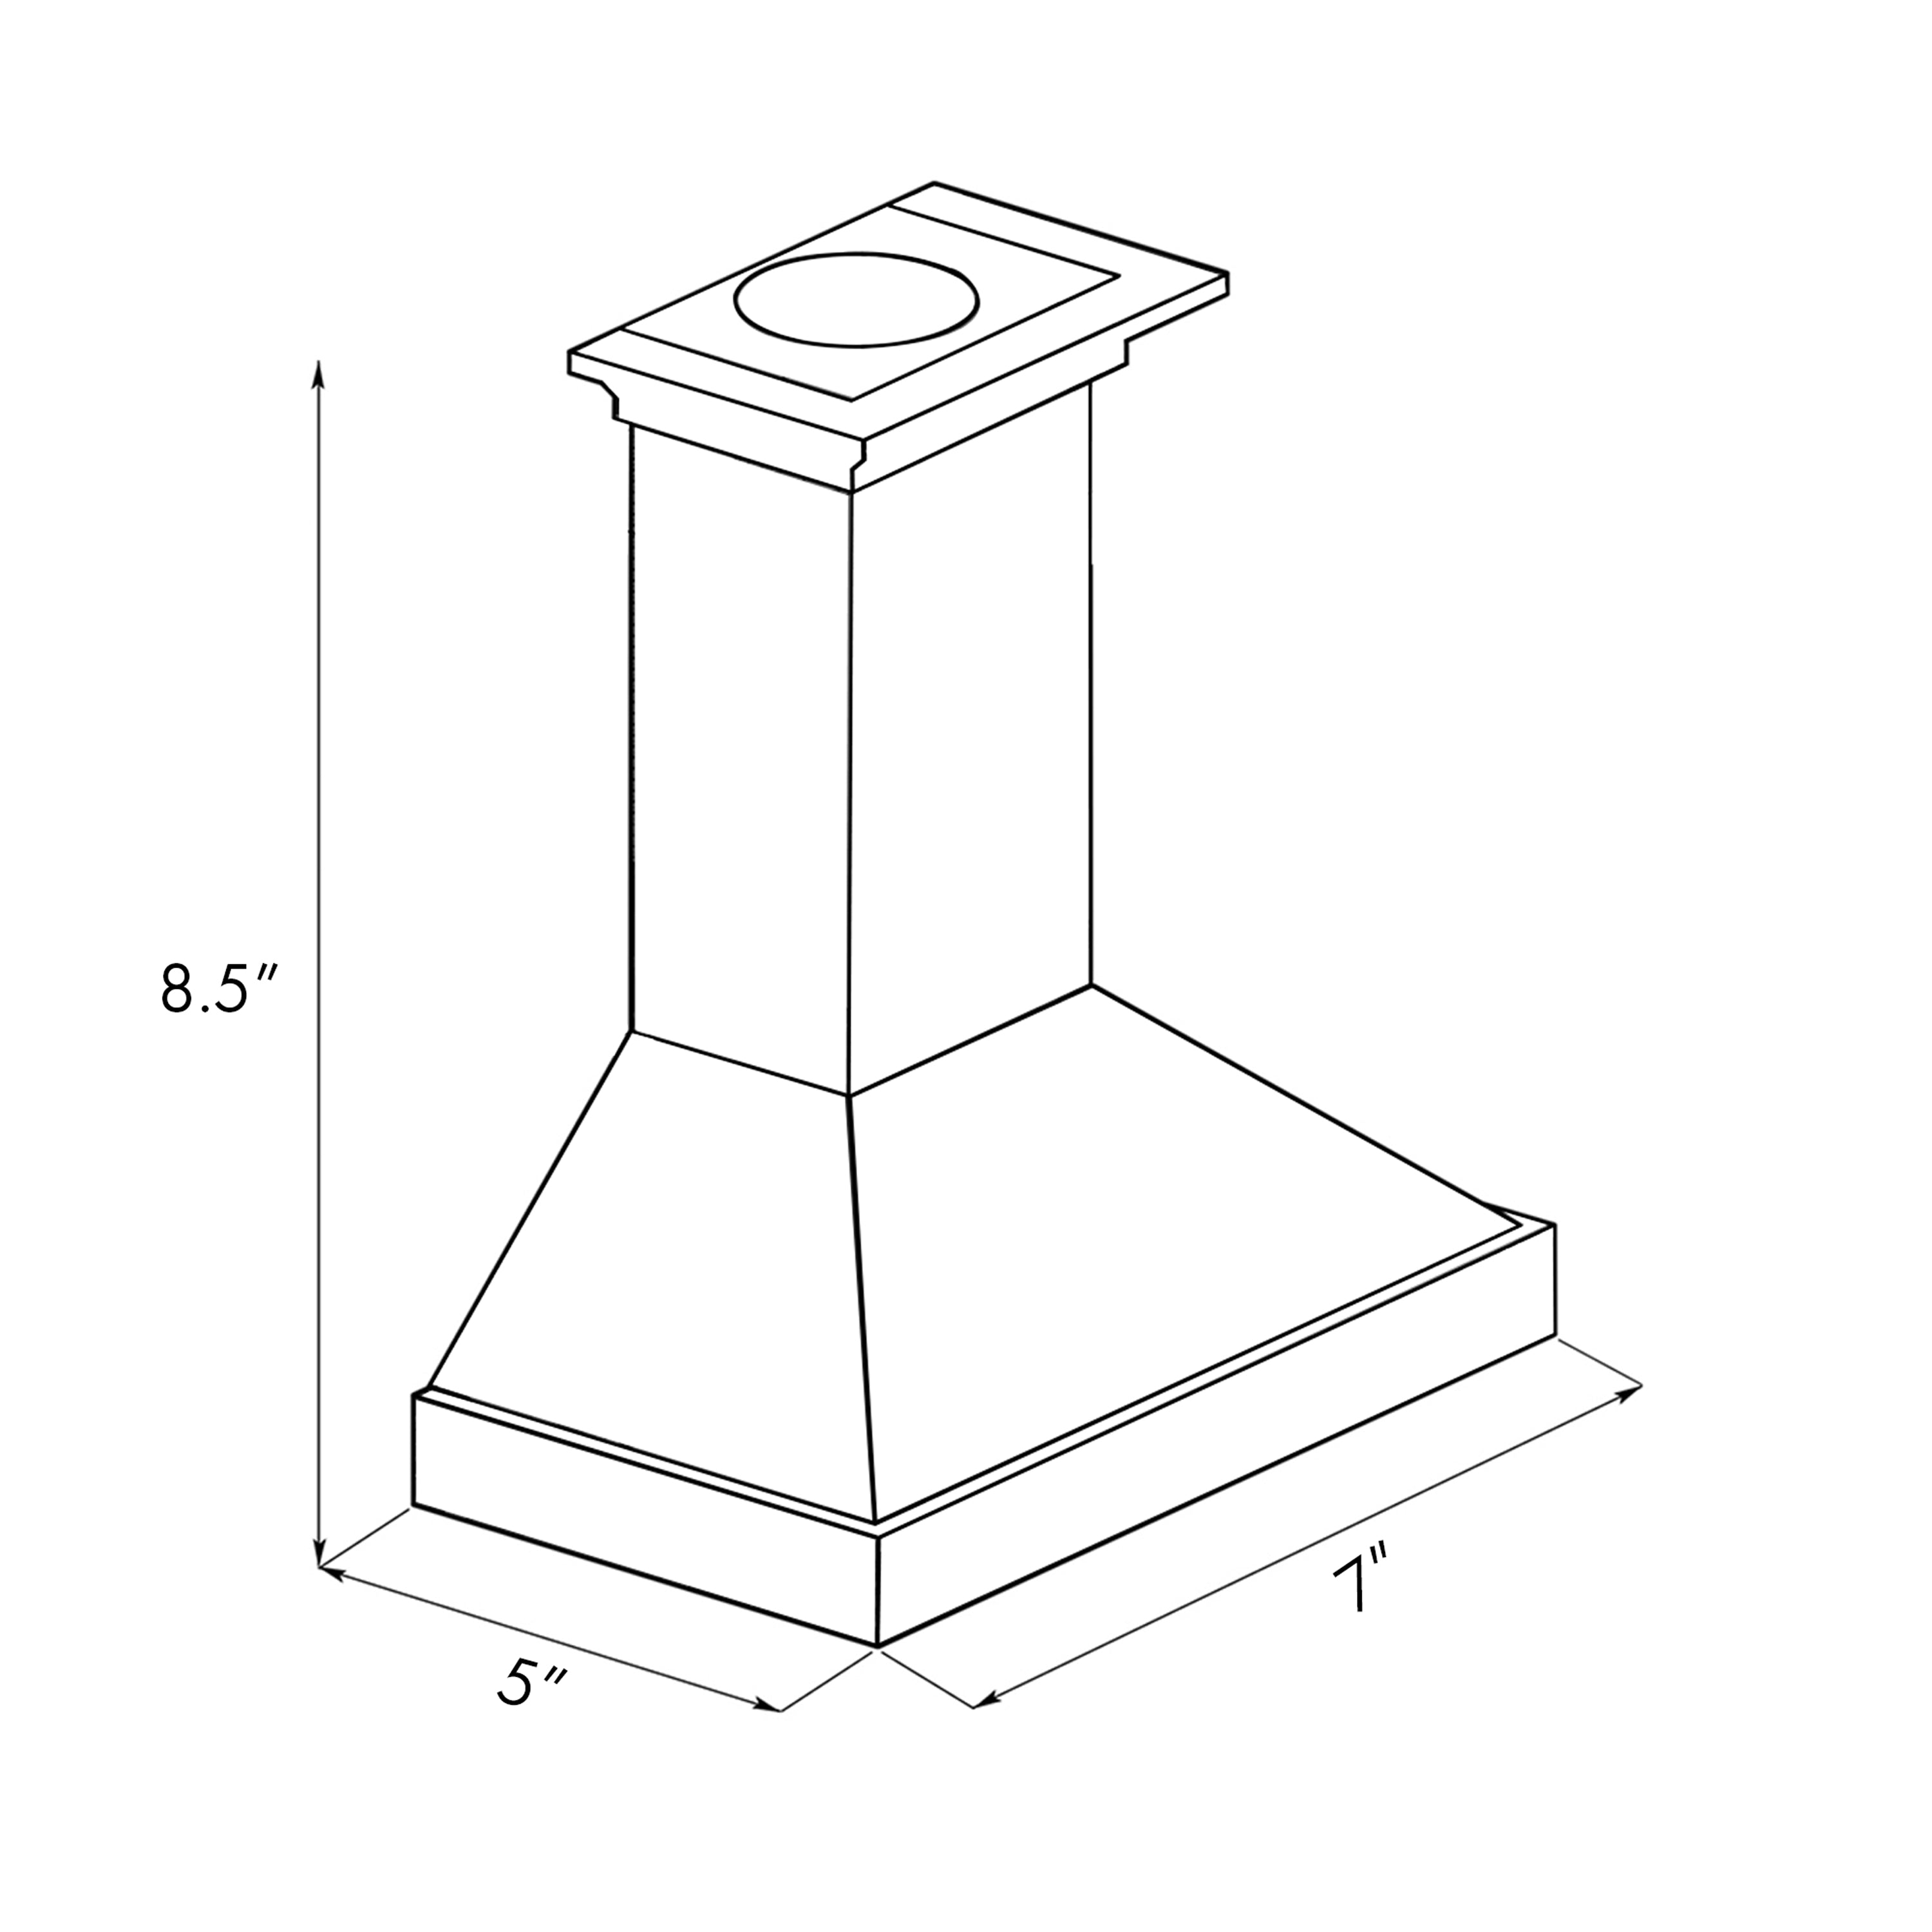 ZLINE Mini Range Hood - Oil-Rubbed Bronze (MH-O) dimensional diagram with measurements.